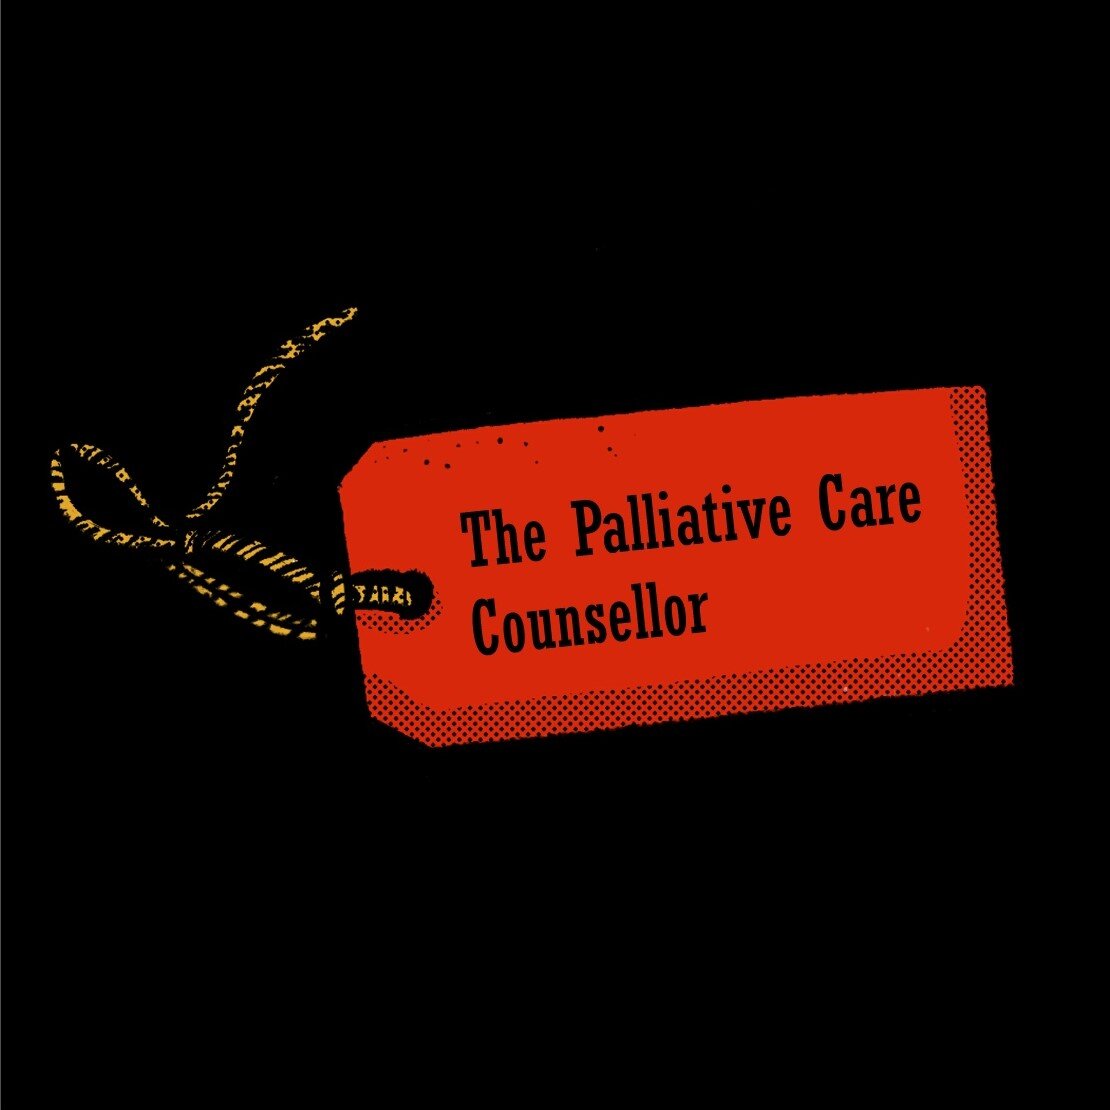 Episode 3: The Palliative Care Counselor